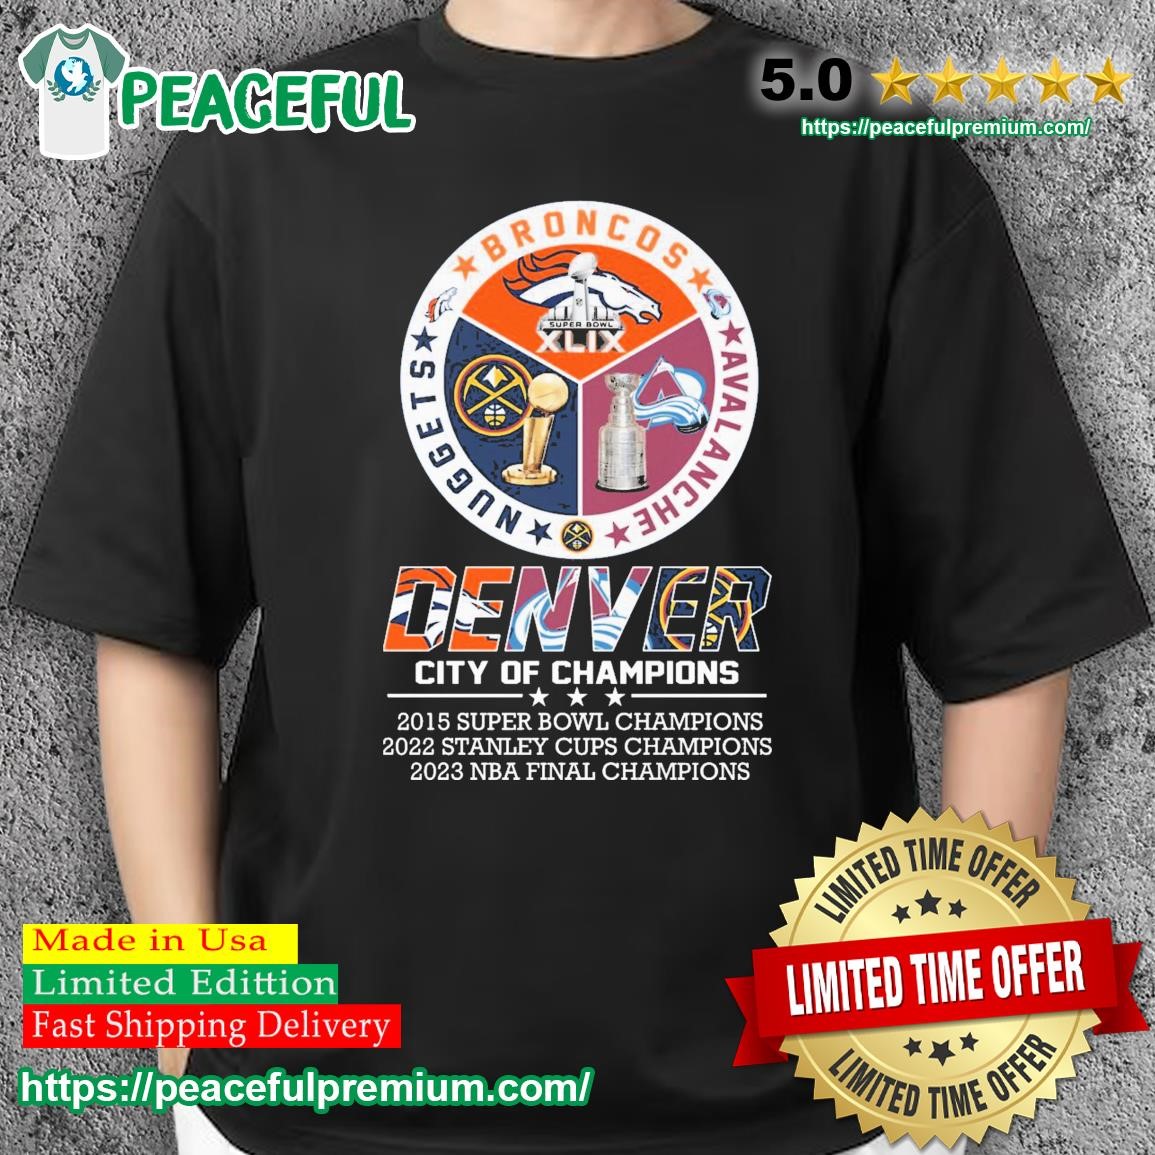 Funny Superbowl T-Shirts & T-Shirt Designs